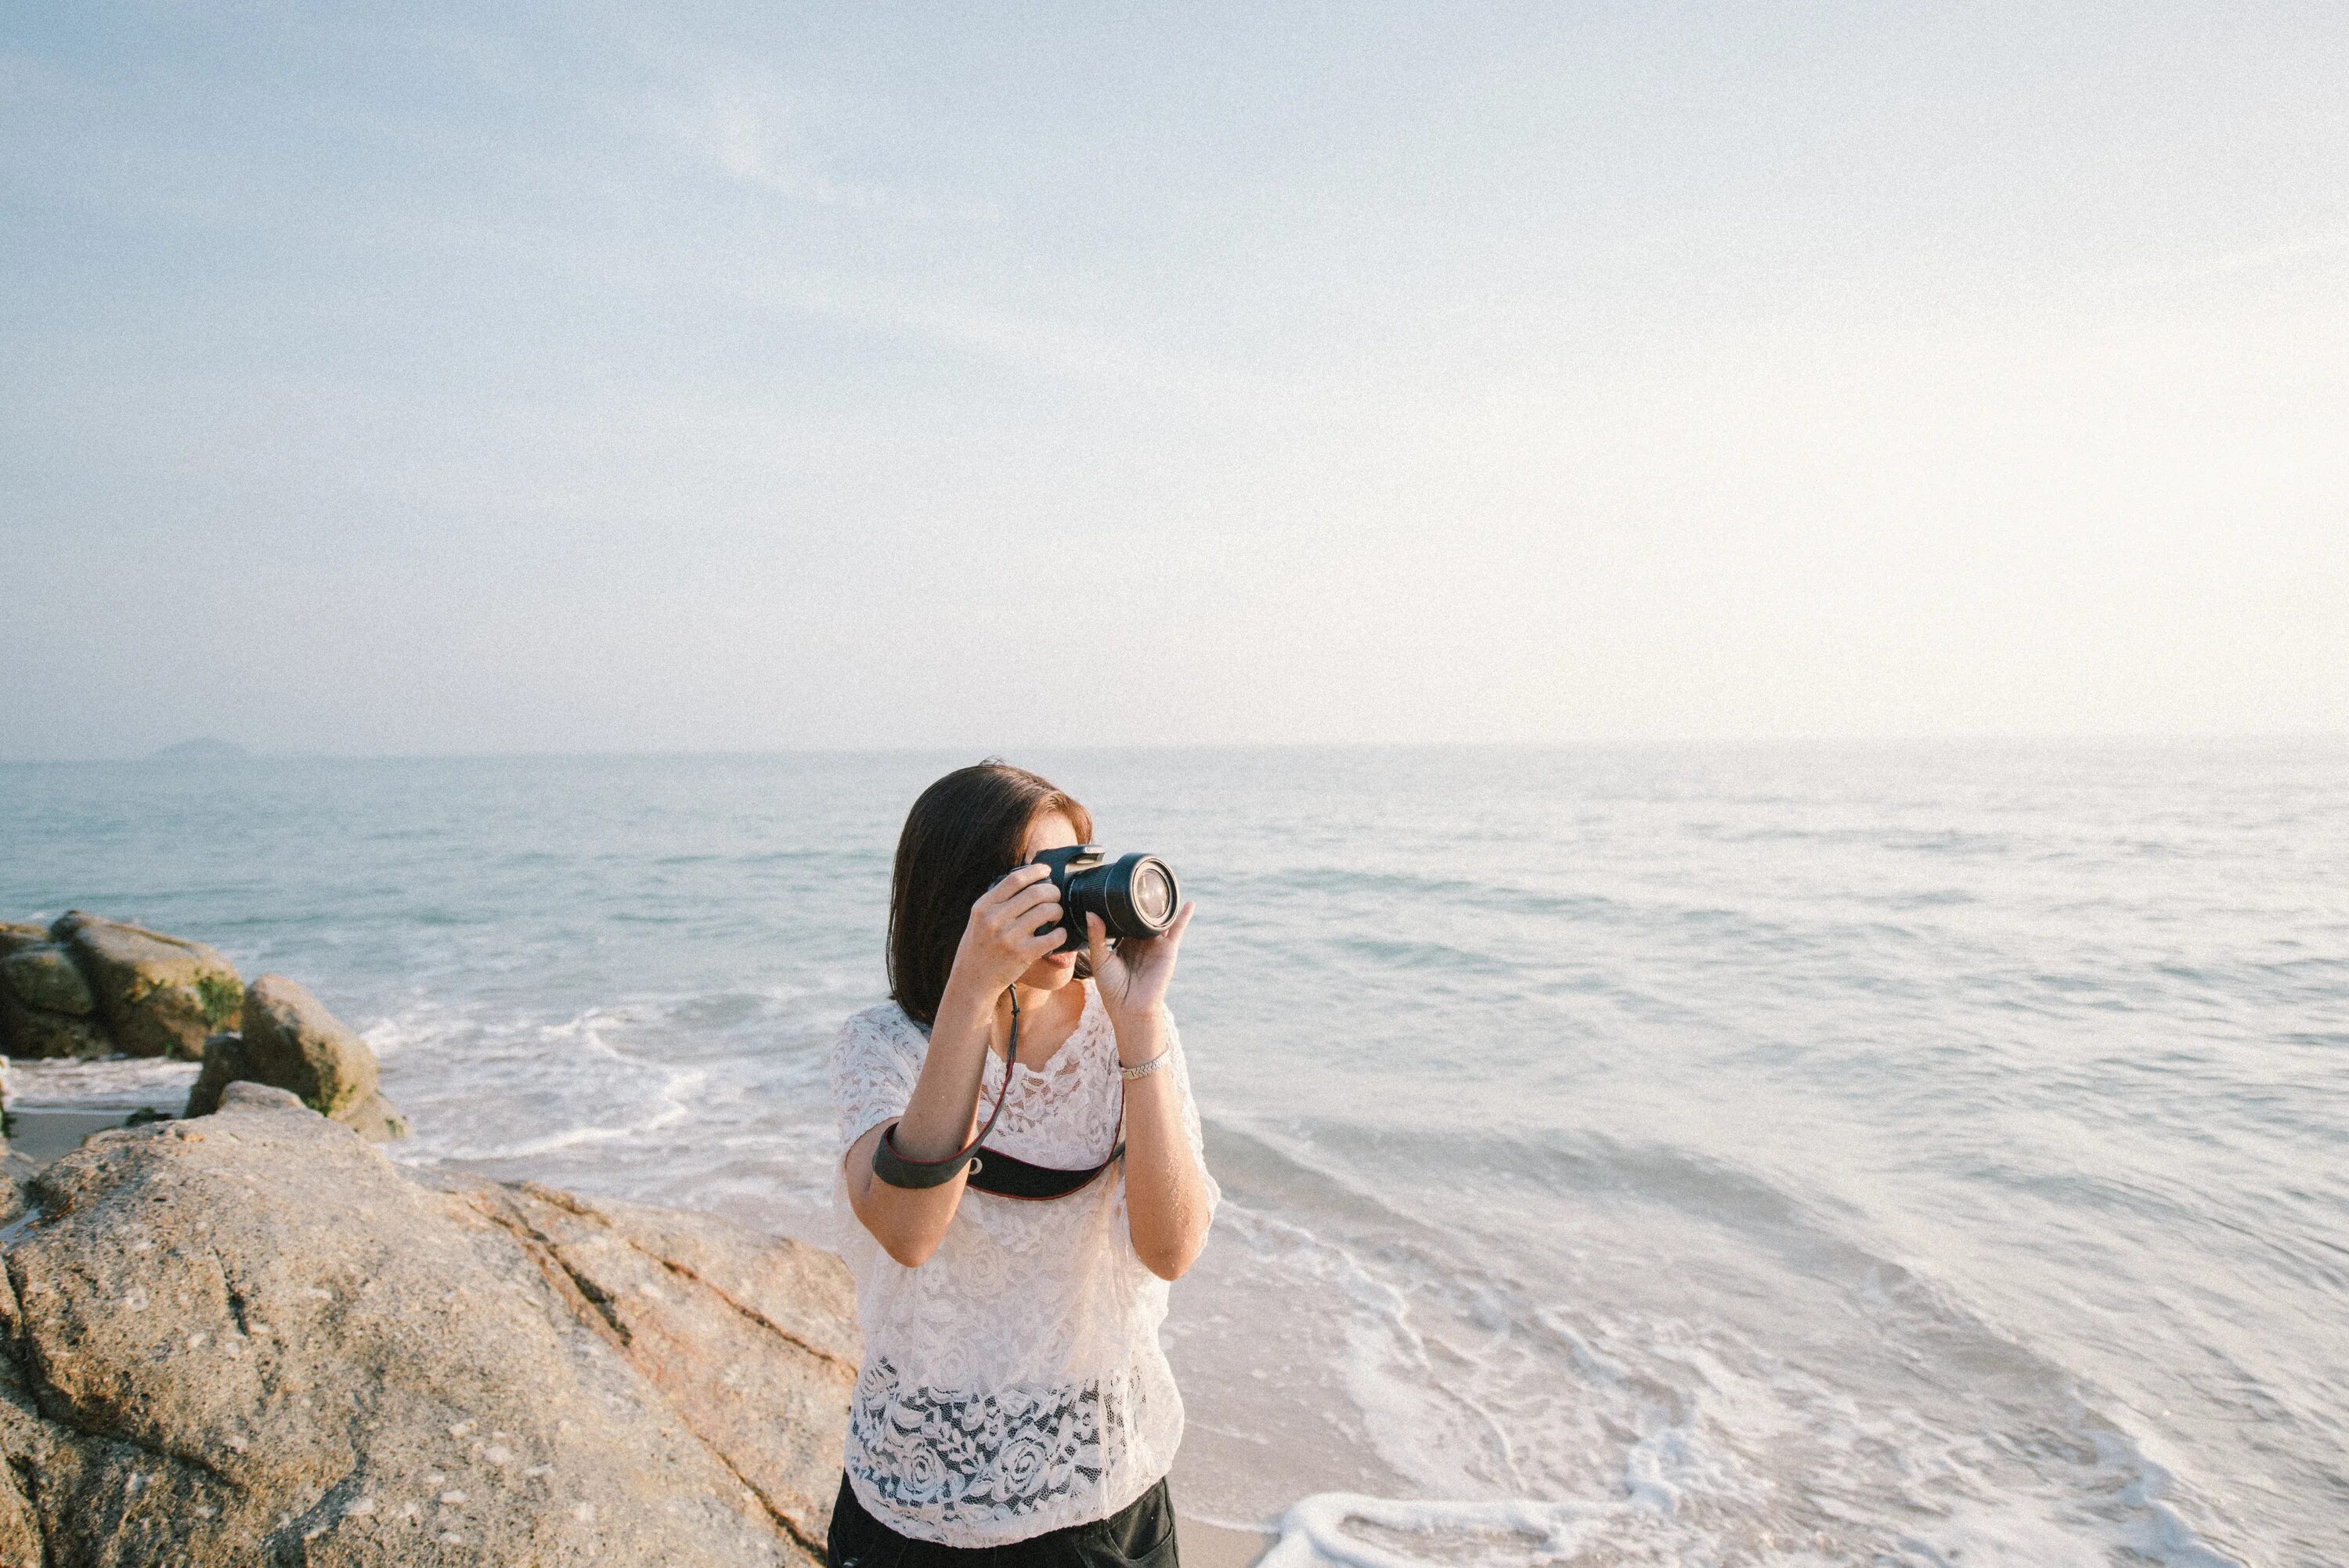 Ждана фотограф. Девушка с фотоаппаратом. Девушка с фотоаппаратом на море. Фотограф фотографирует девушку на море. Фотосессия у моря фотограф.